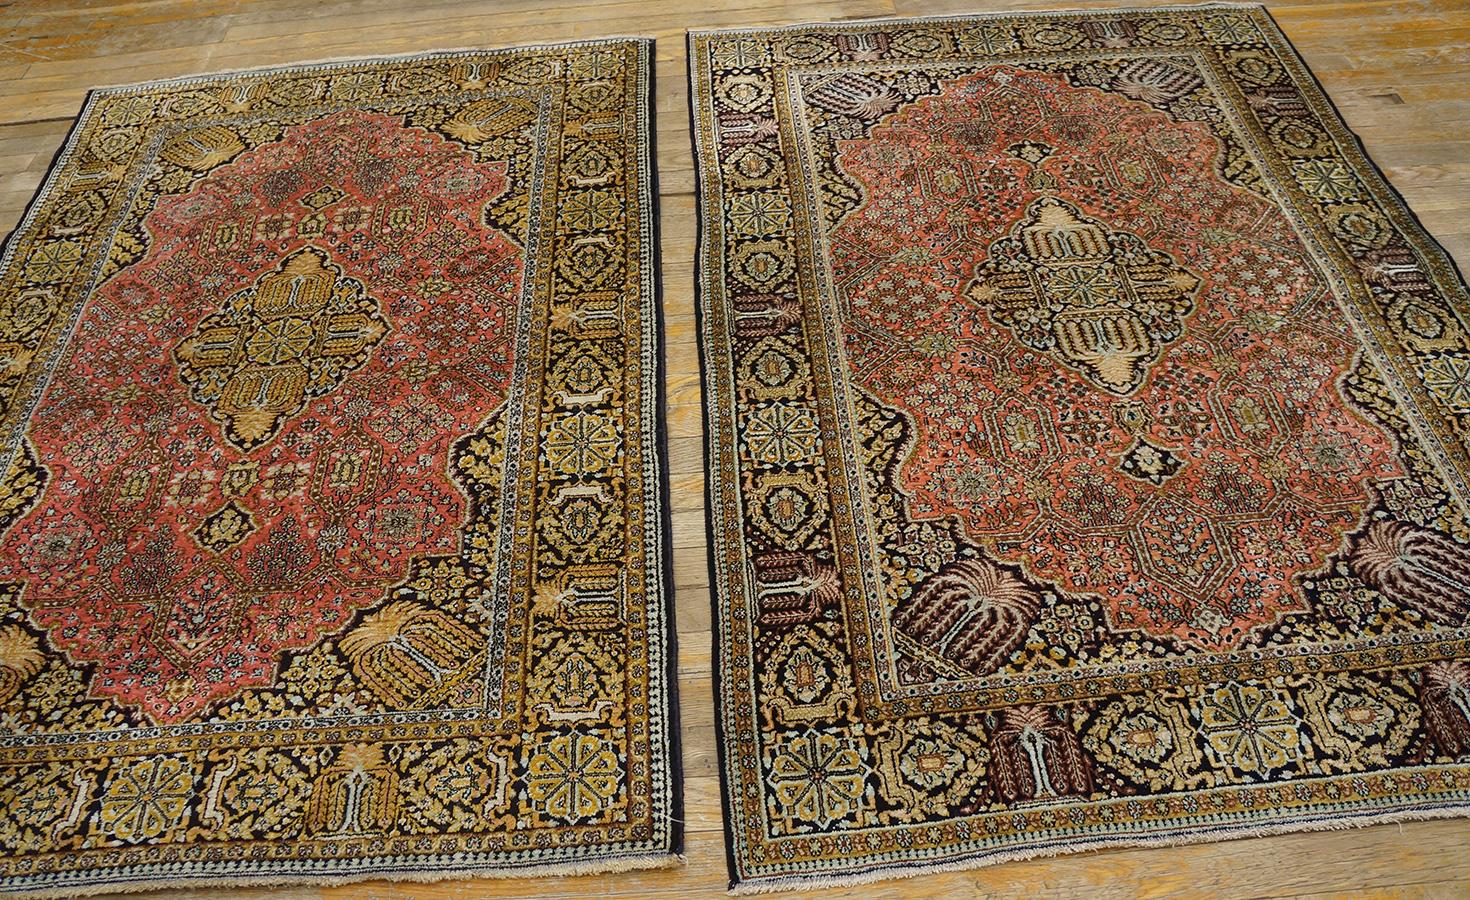 Pair of Mid 20th Century Persian Silk Qum Carpets (3' 7'' x 5' 2'' - 110 x 158) For Sale 4